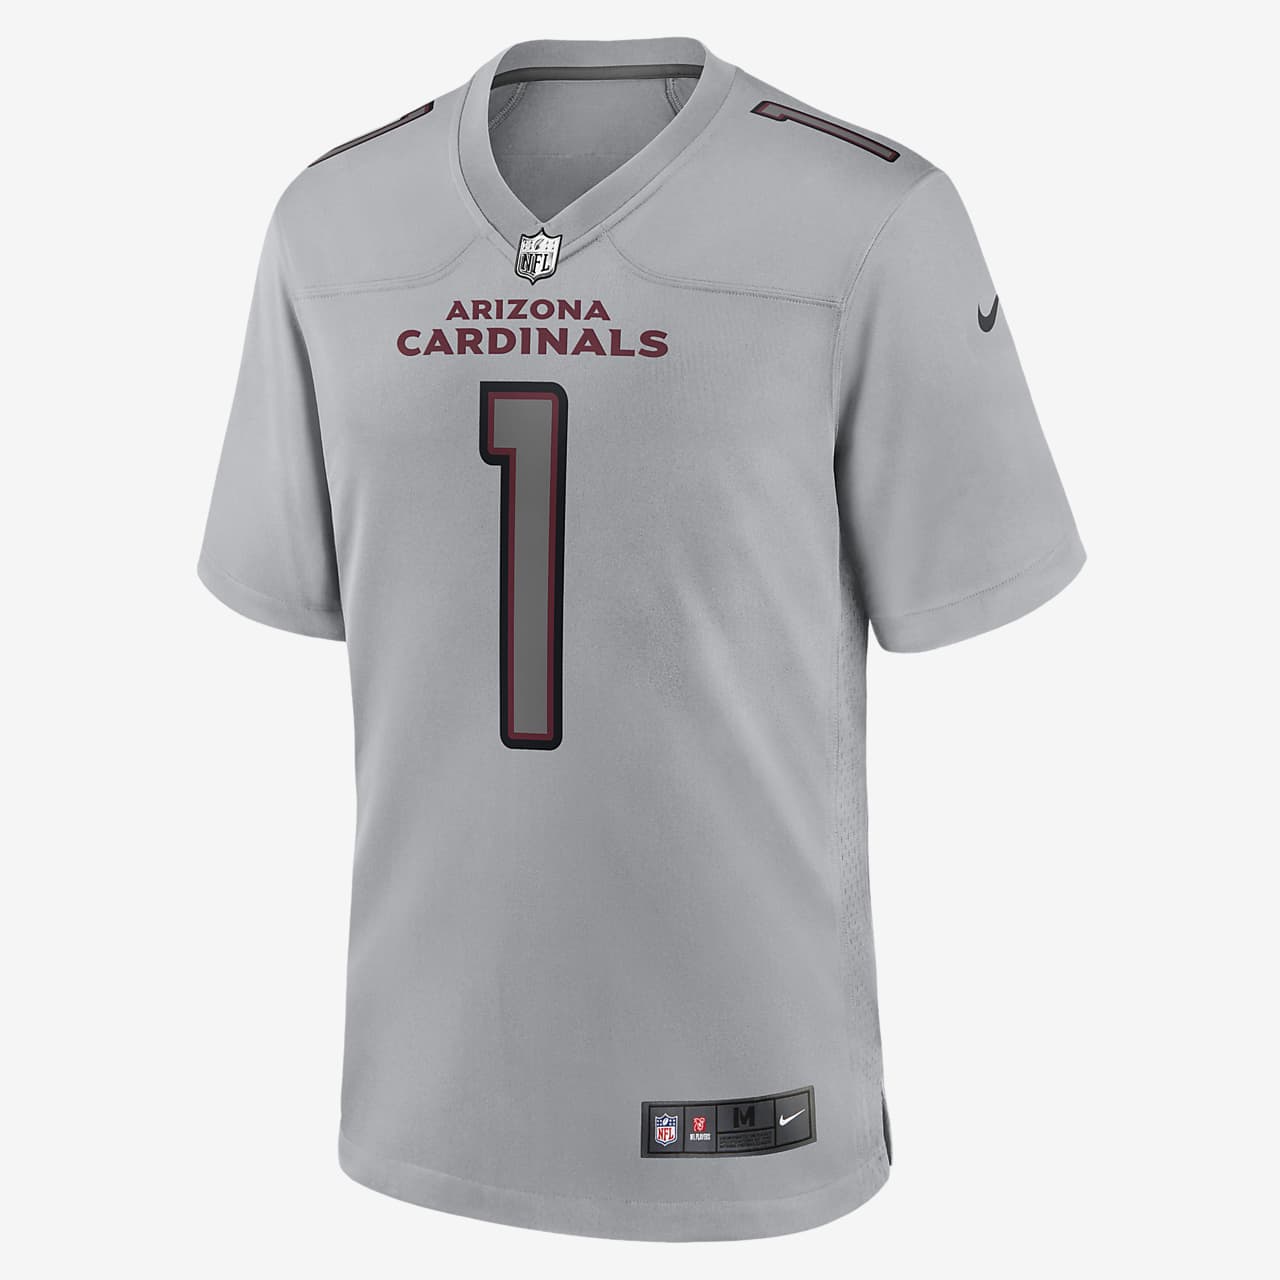 white arizona cardinals jersey